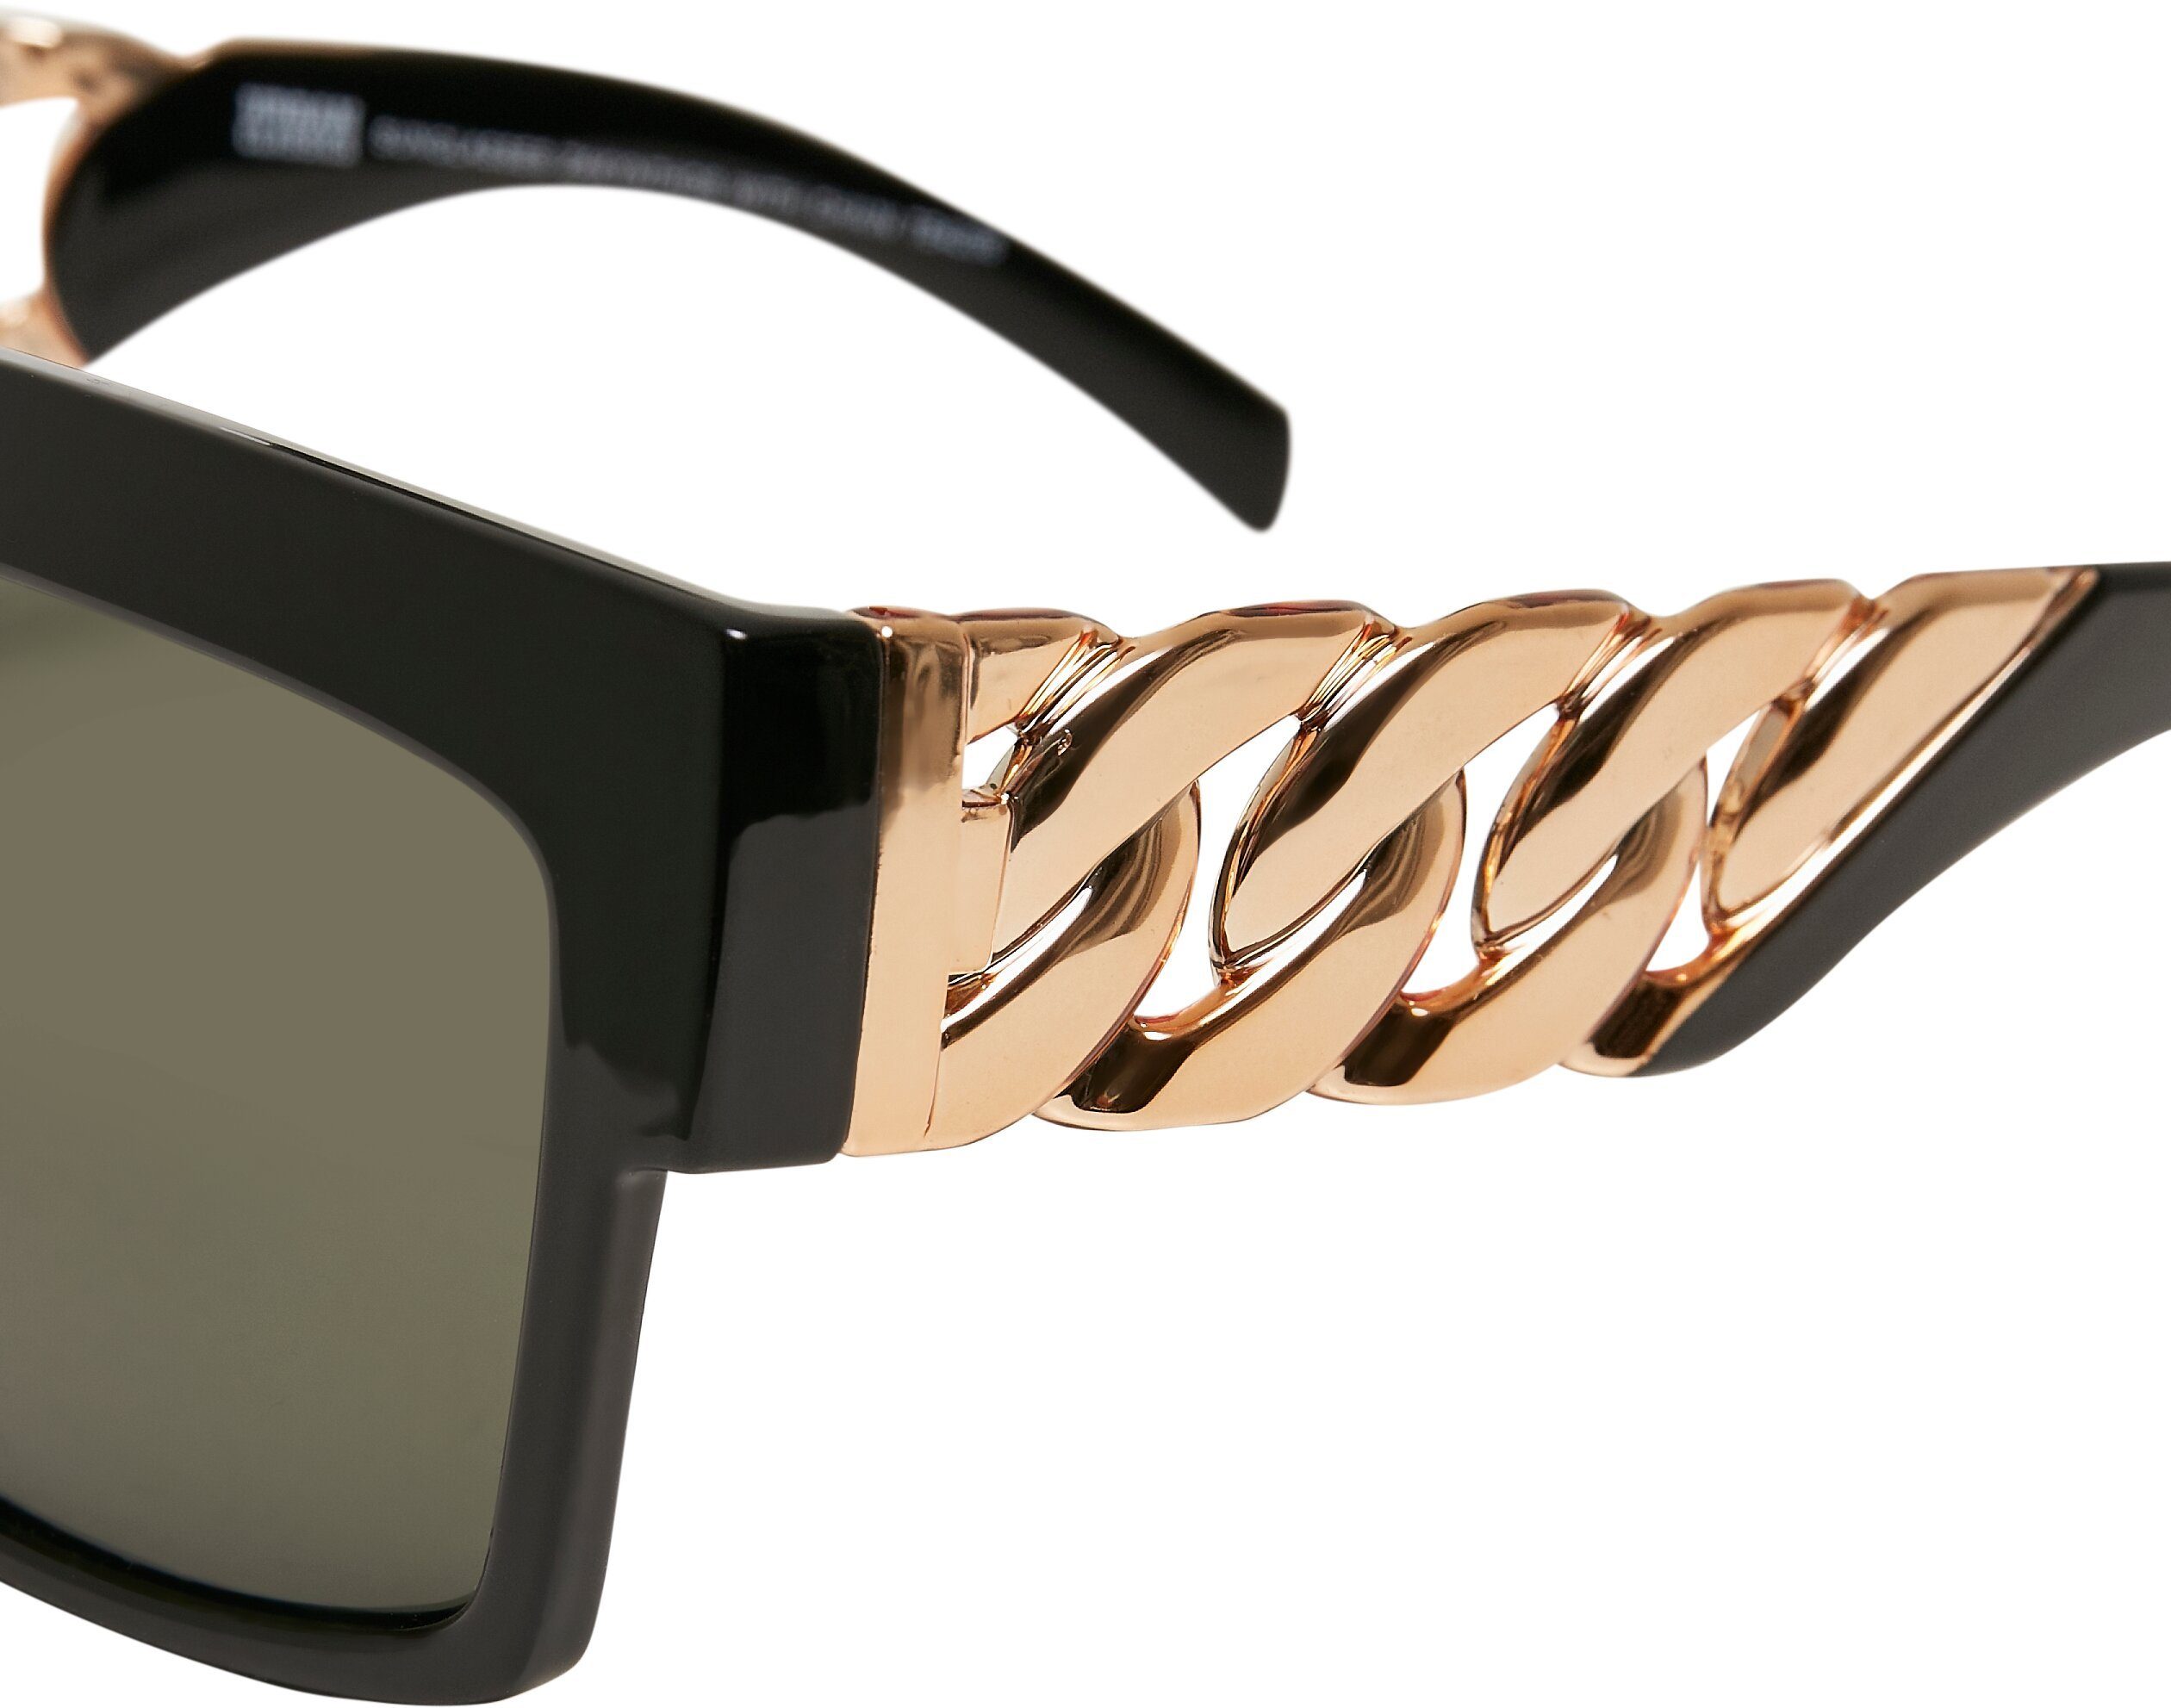 Sonnenbrille Accessoires black/gold with Zakynthos Sunglasses Chain URBAN CLASSICS